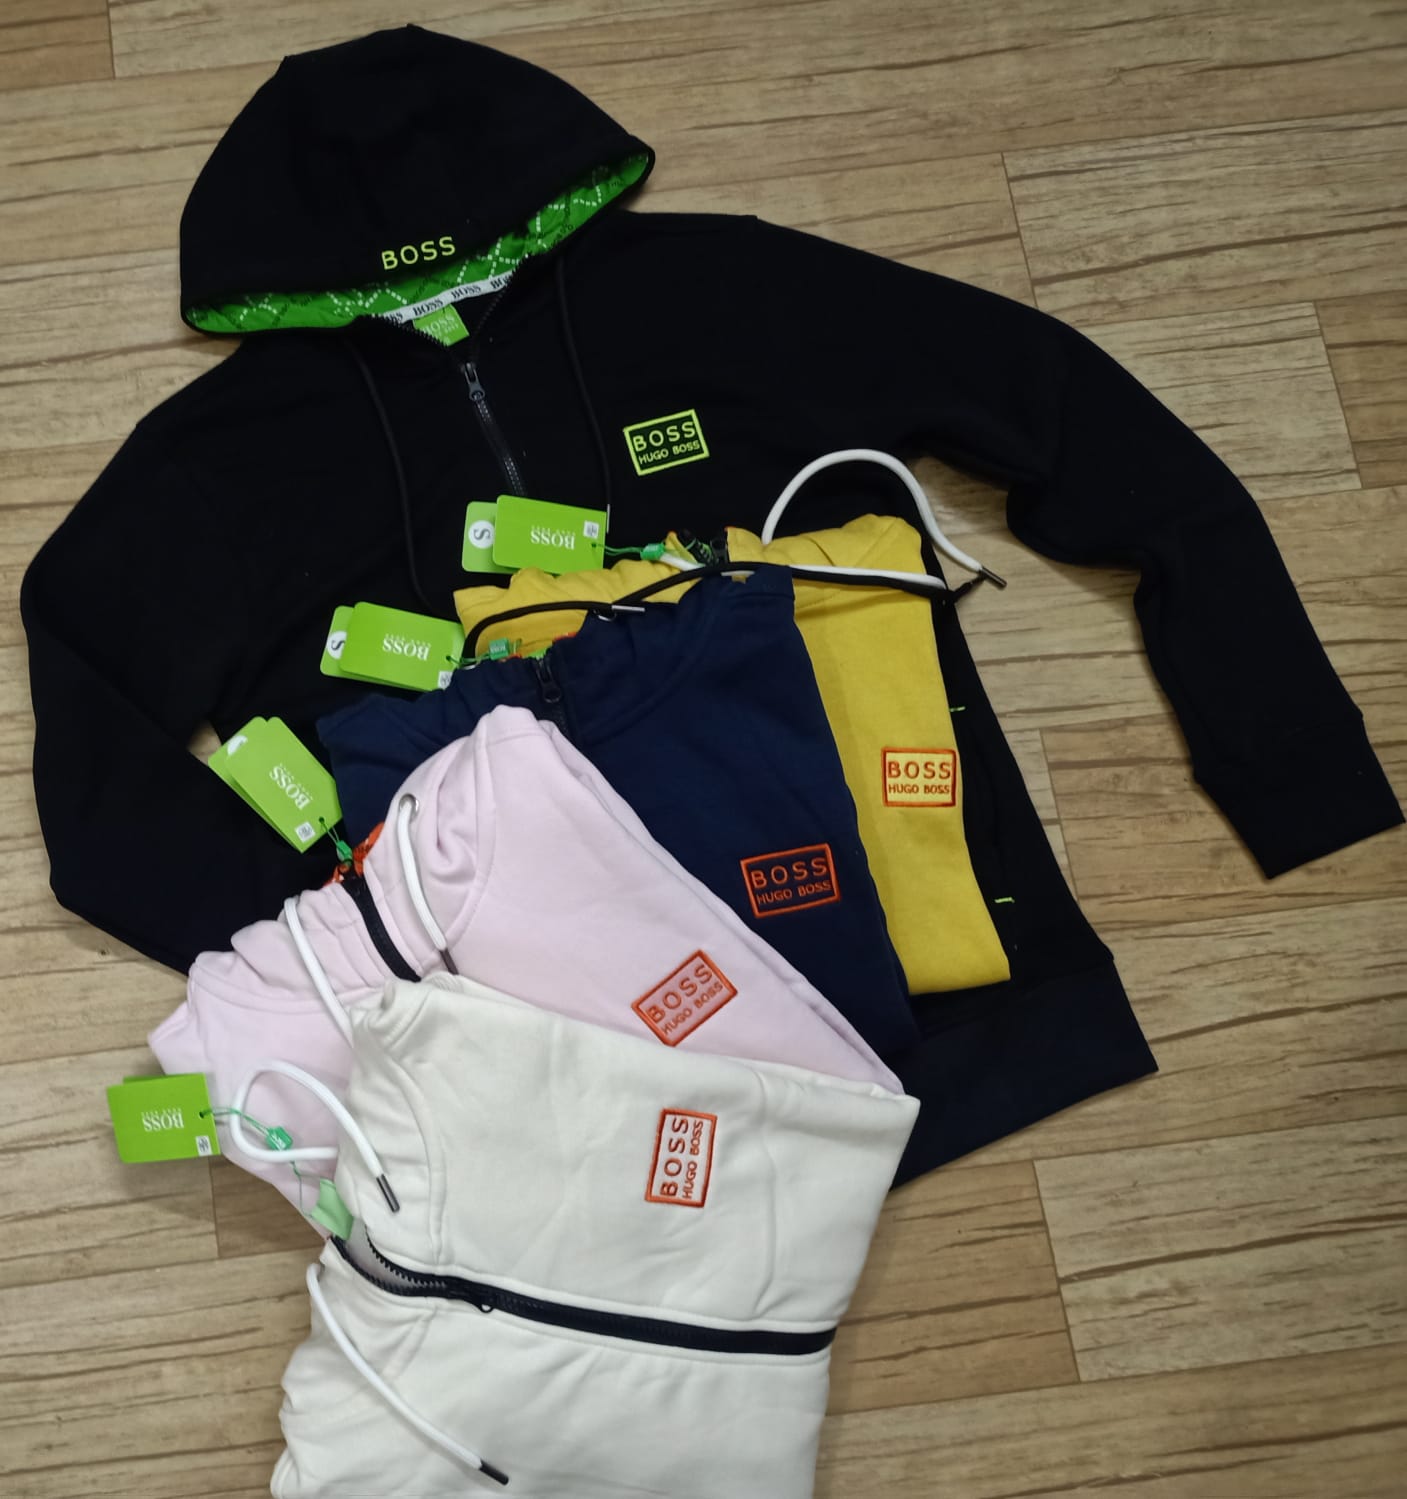 Super Premium Exclusive Winter Long Sleeve Hoodie For Men (Baby Pink) - WH09